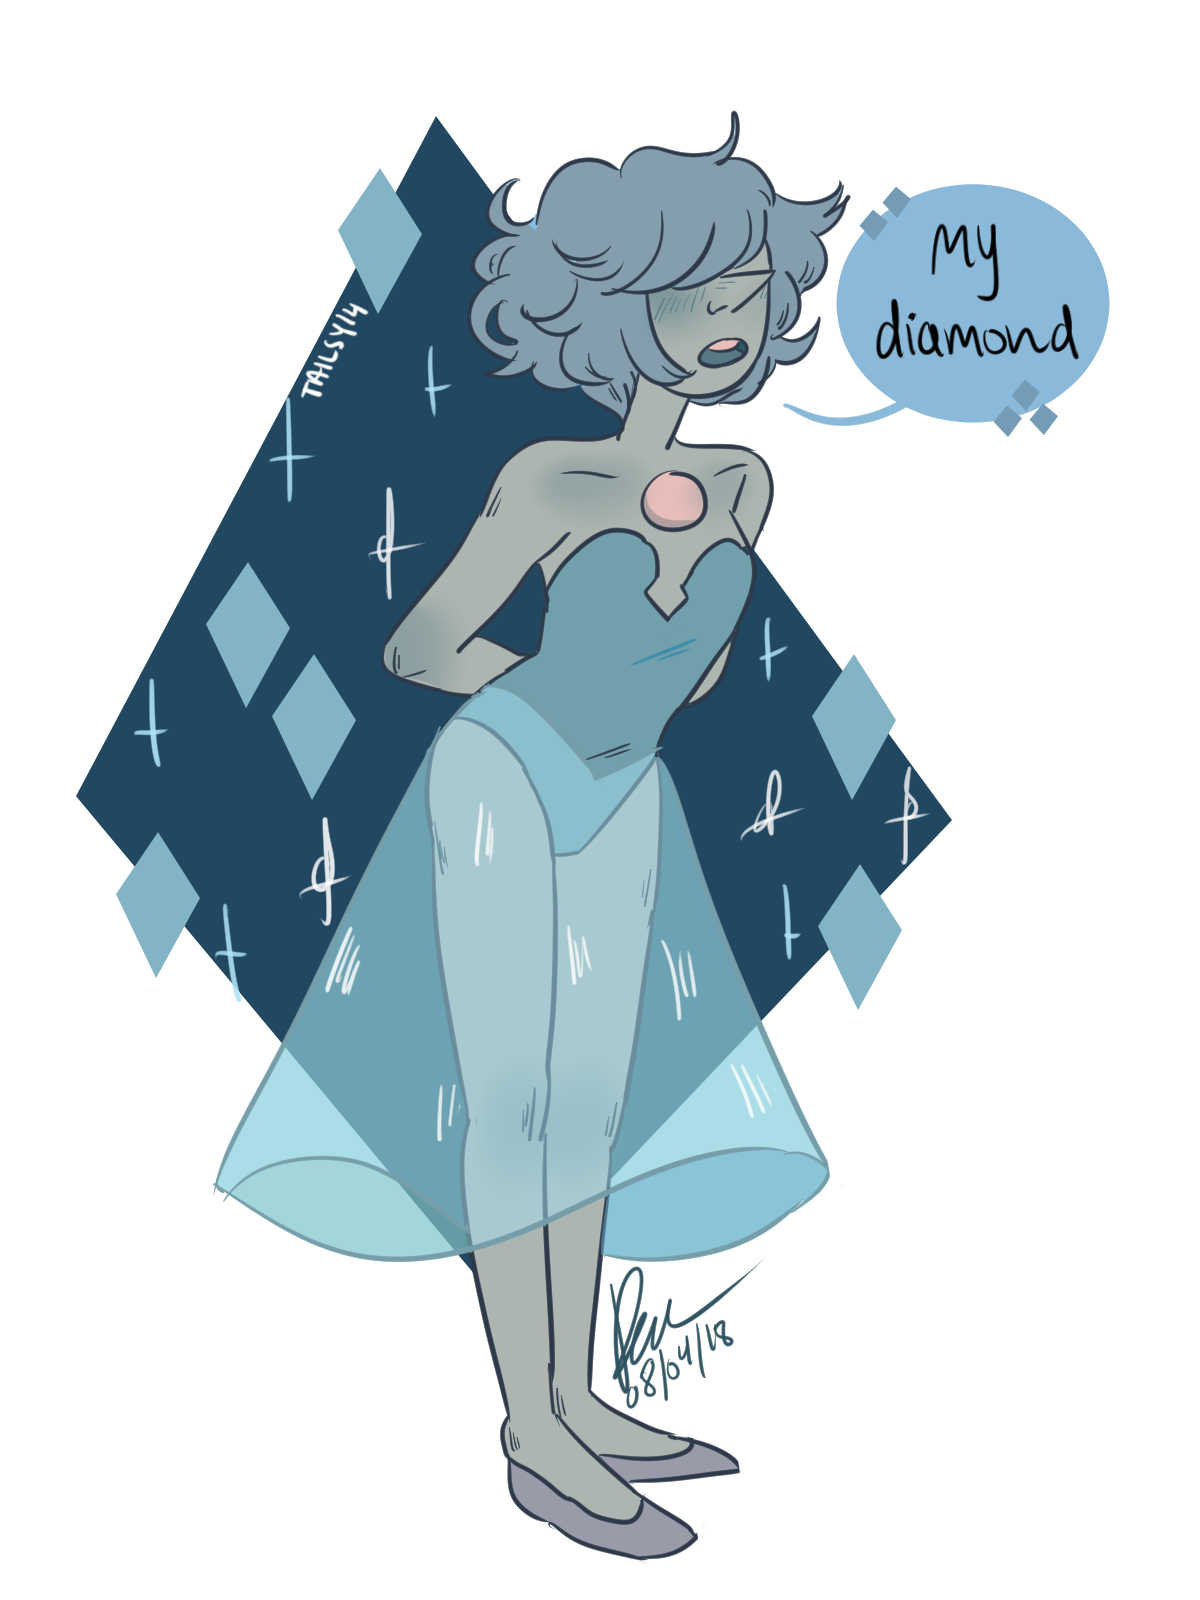 Lovely Pearl